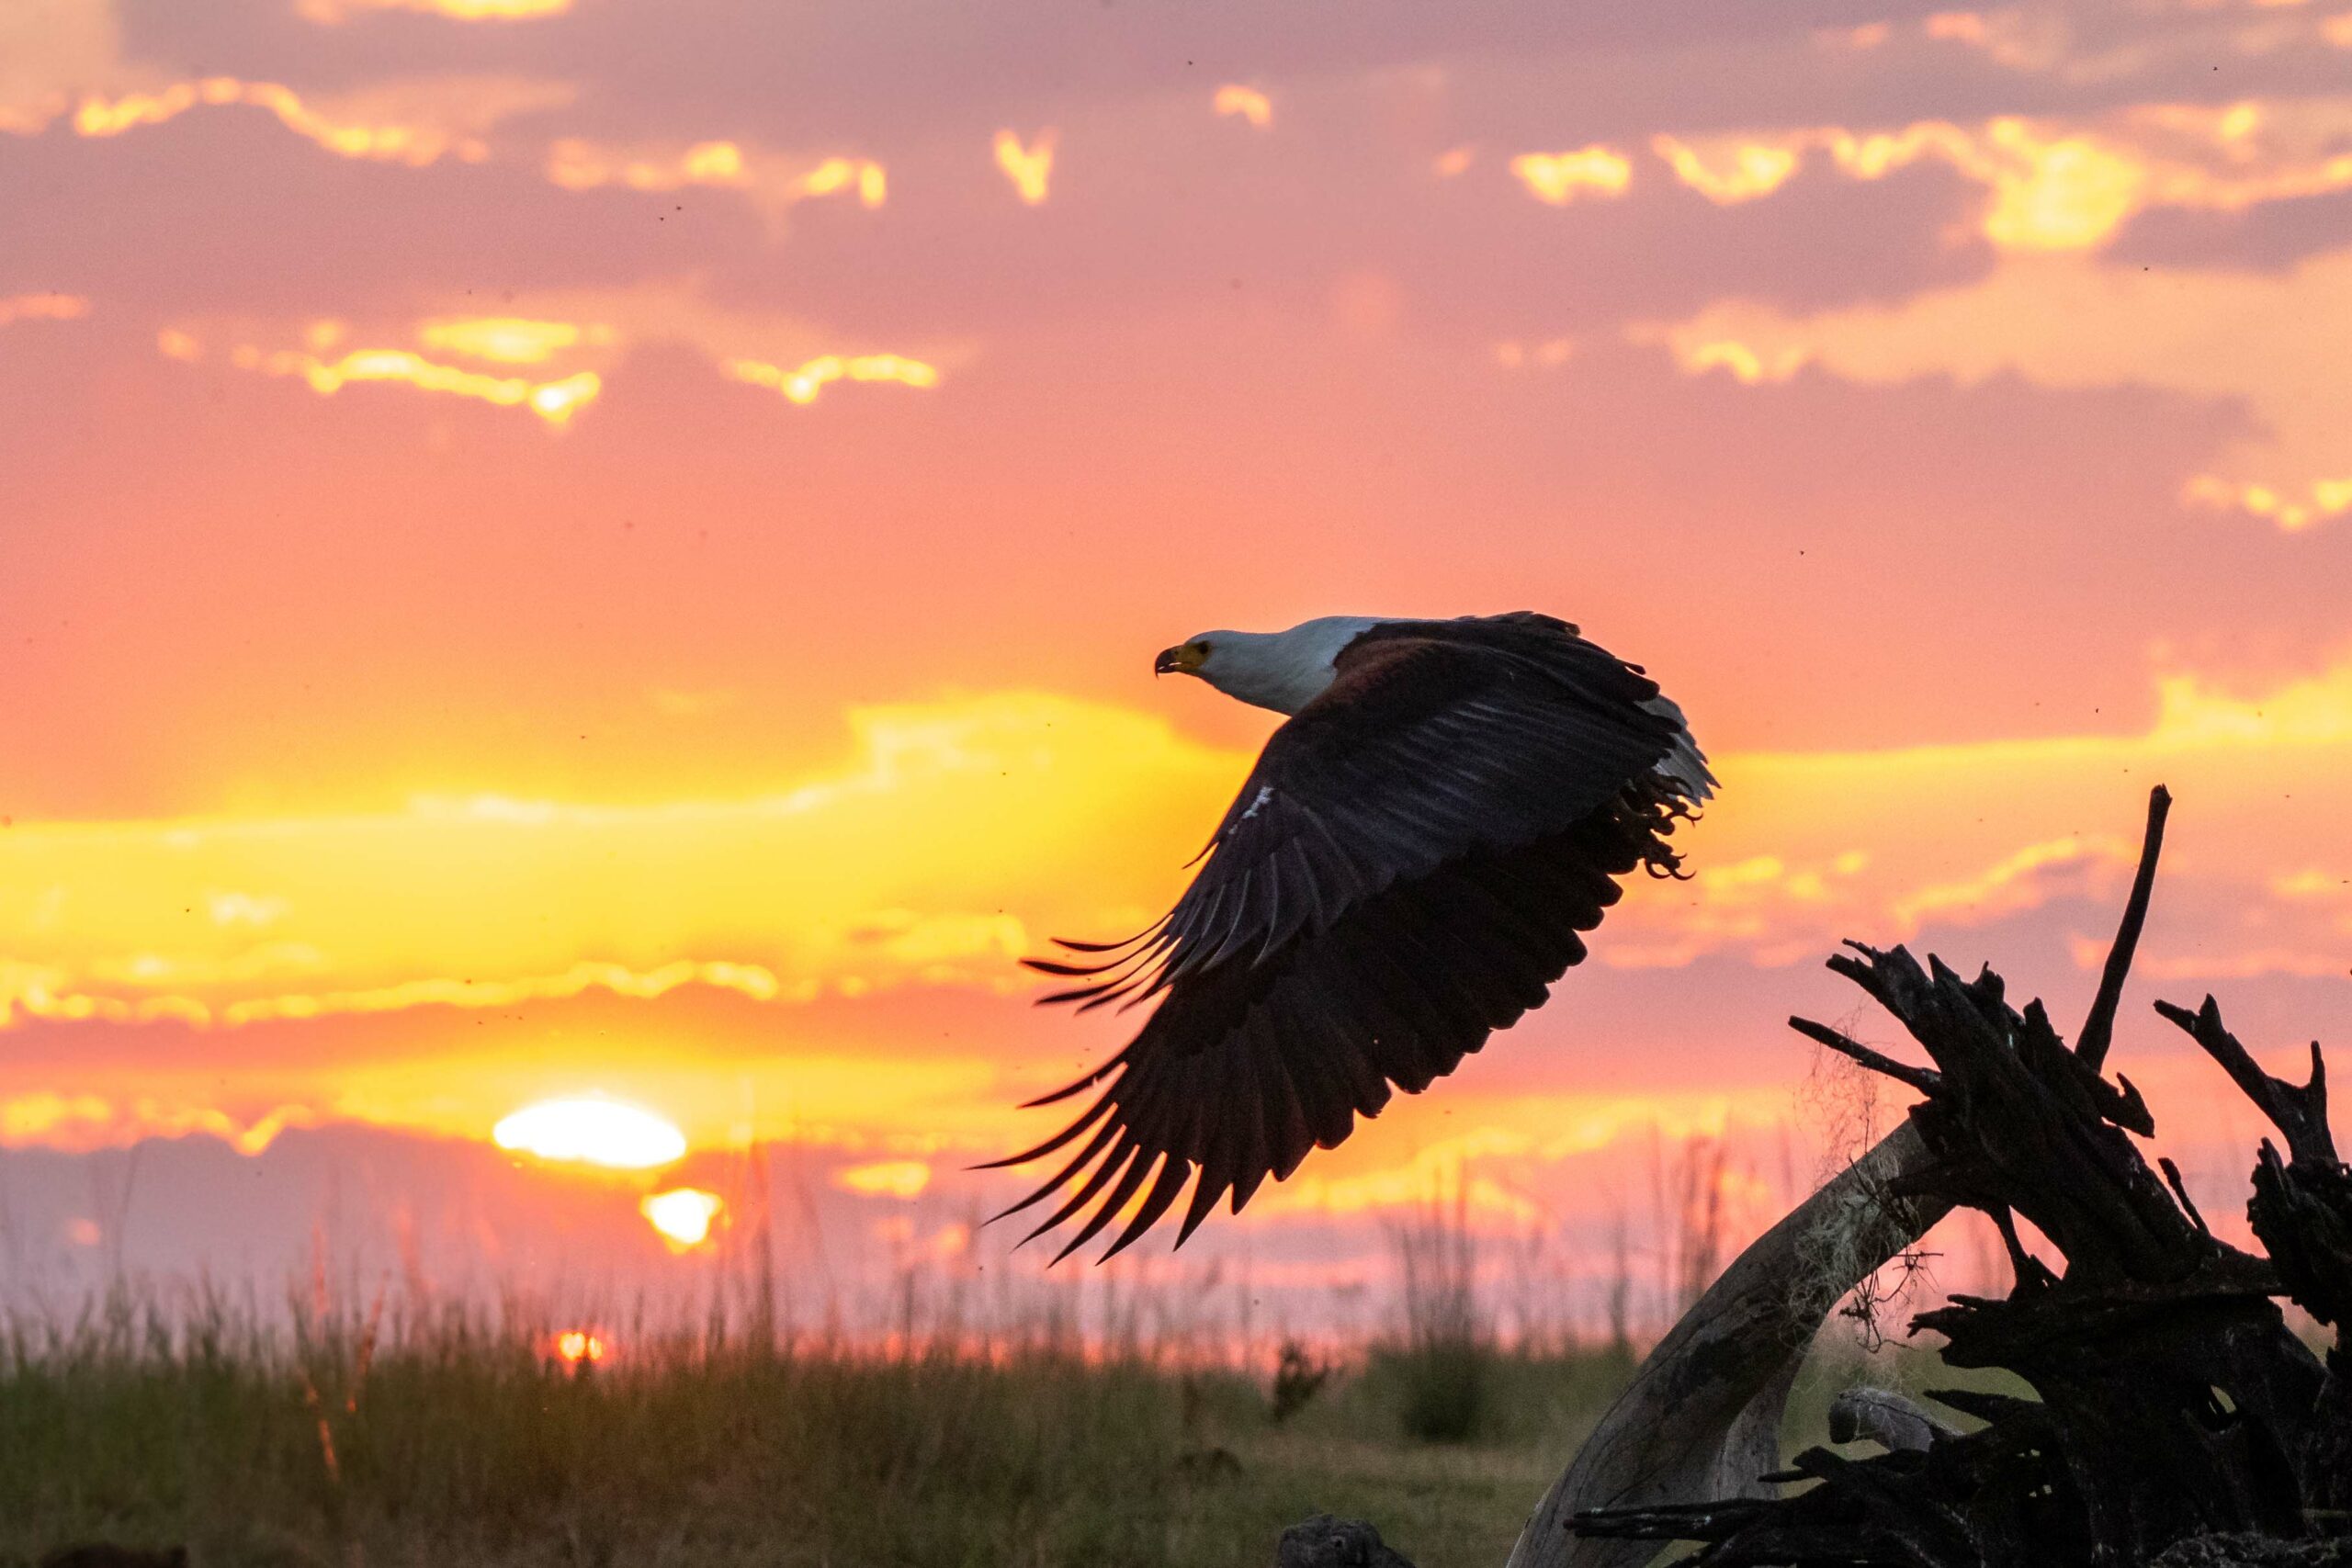 fish eagle take off at sunset.